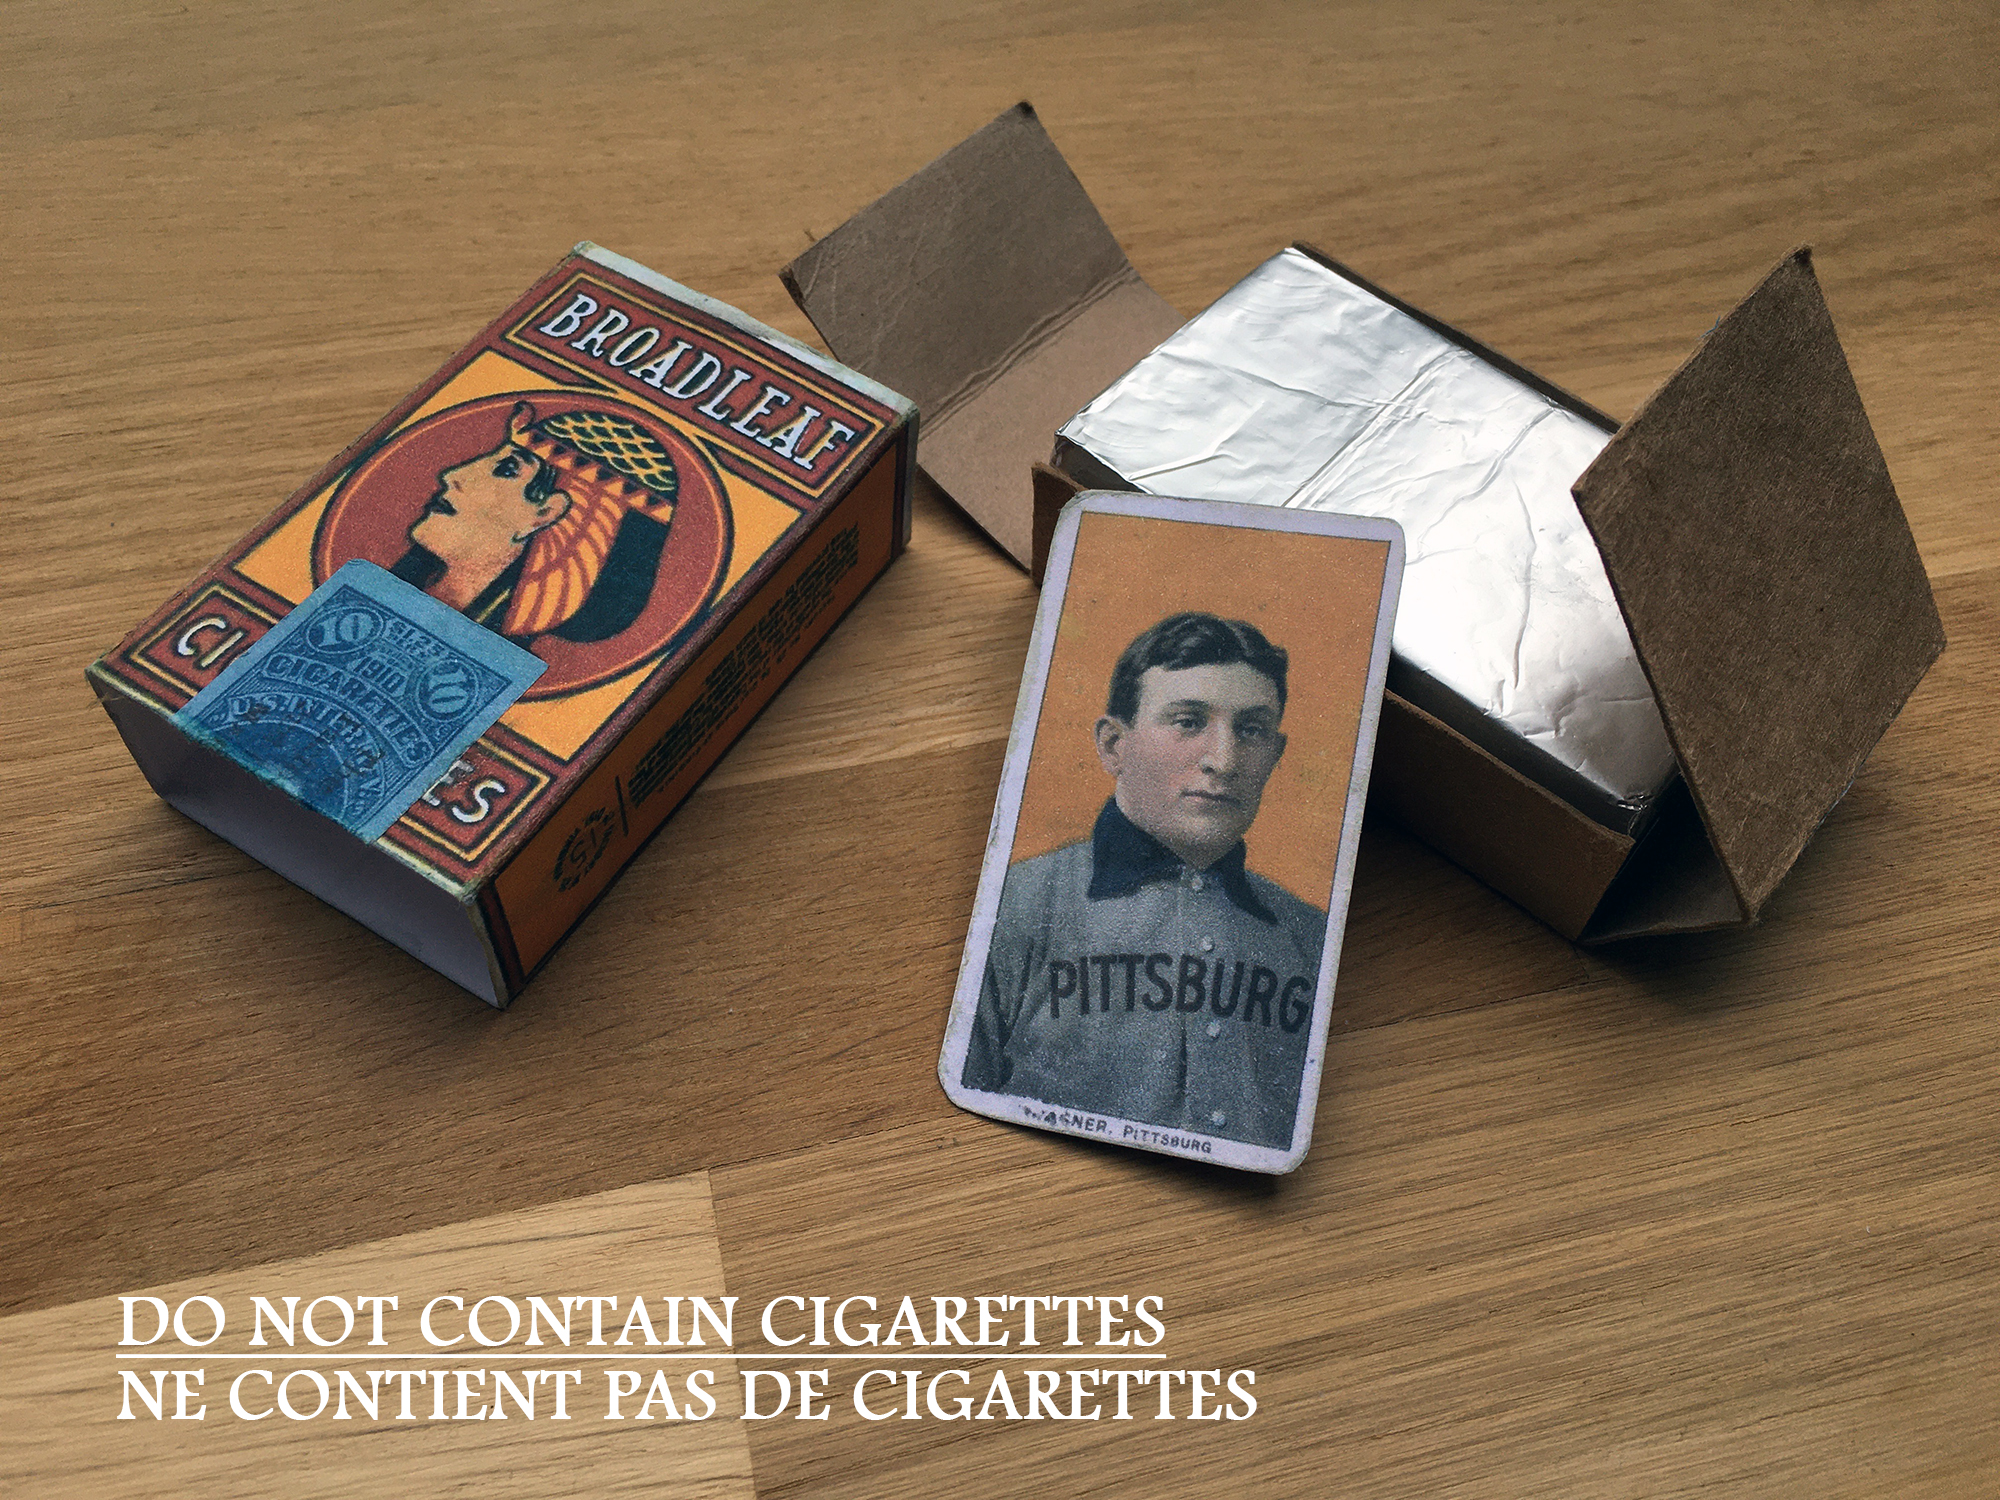 BROADLEAF Cigarette Pack T206 HONUS WAGNER 1910 Baseball Card Tobacco  REPLICA - khristore